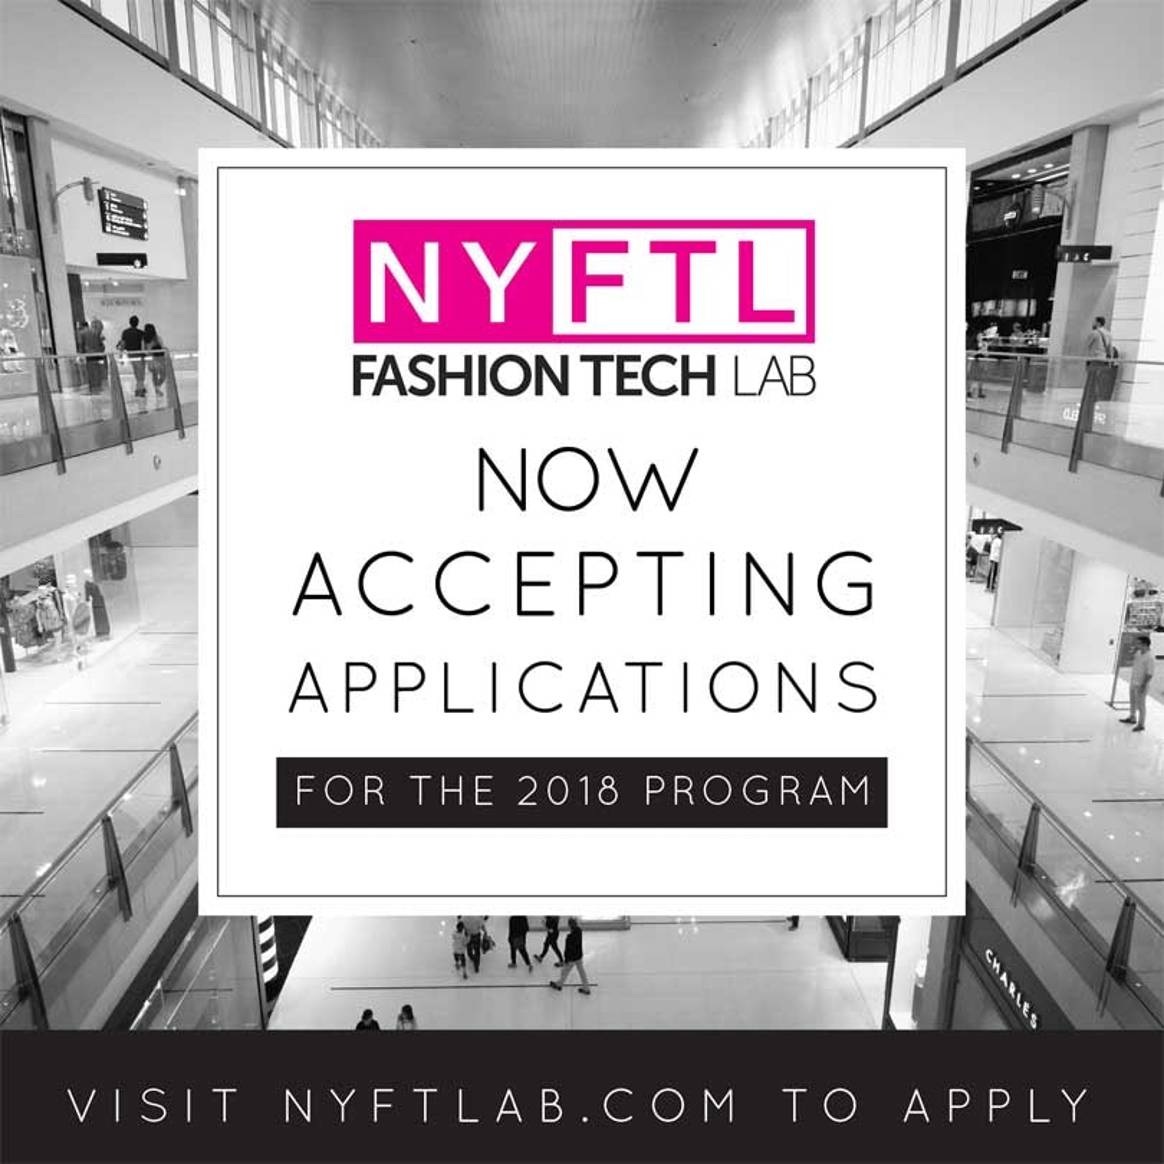 New York Fashion Tech Lab Opens 2018 Applications for their Fashion Technology program